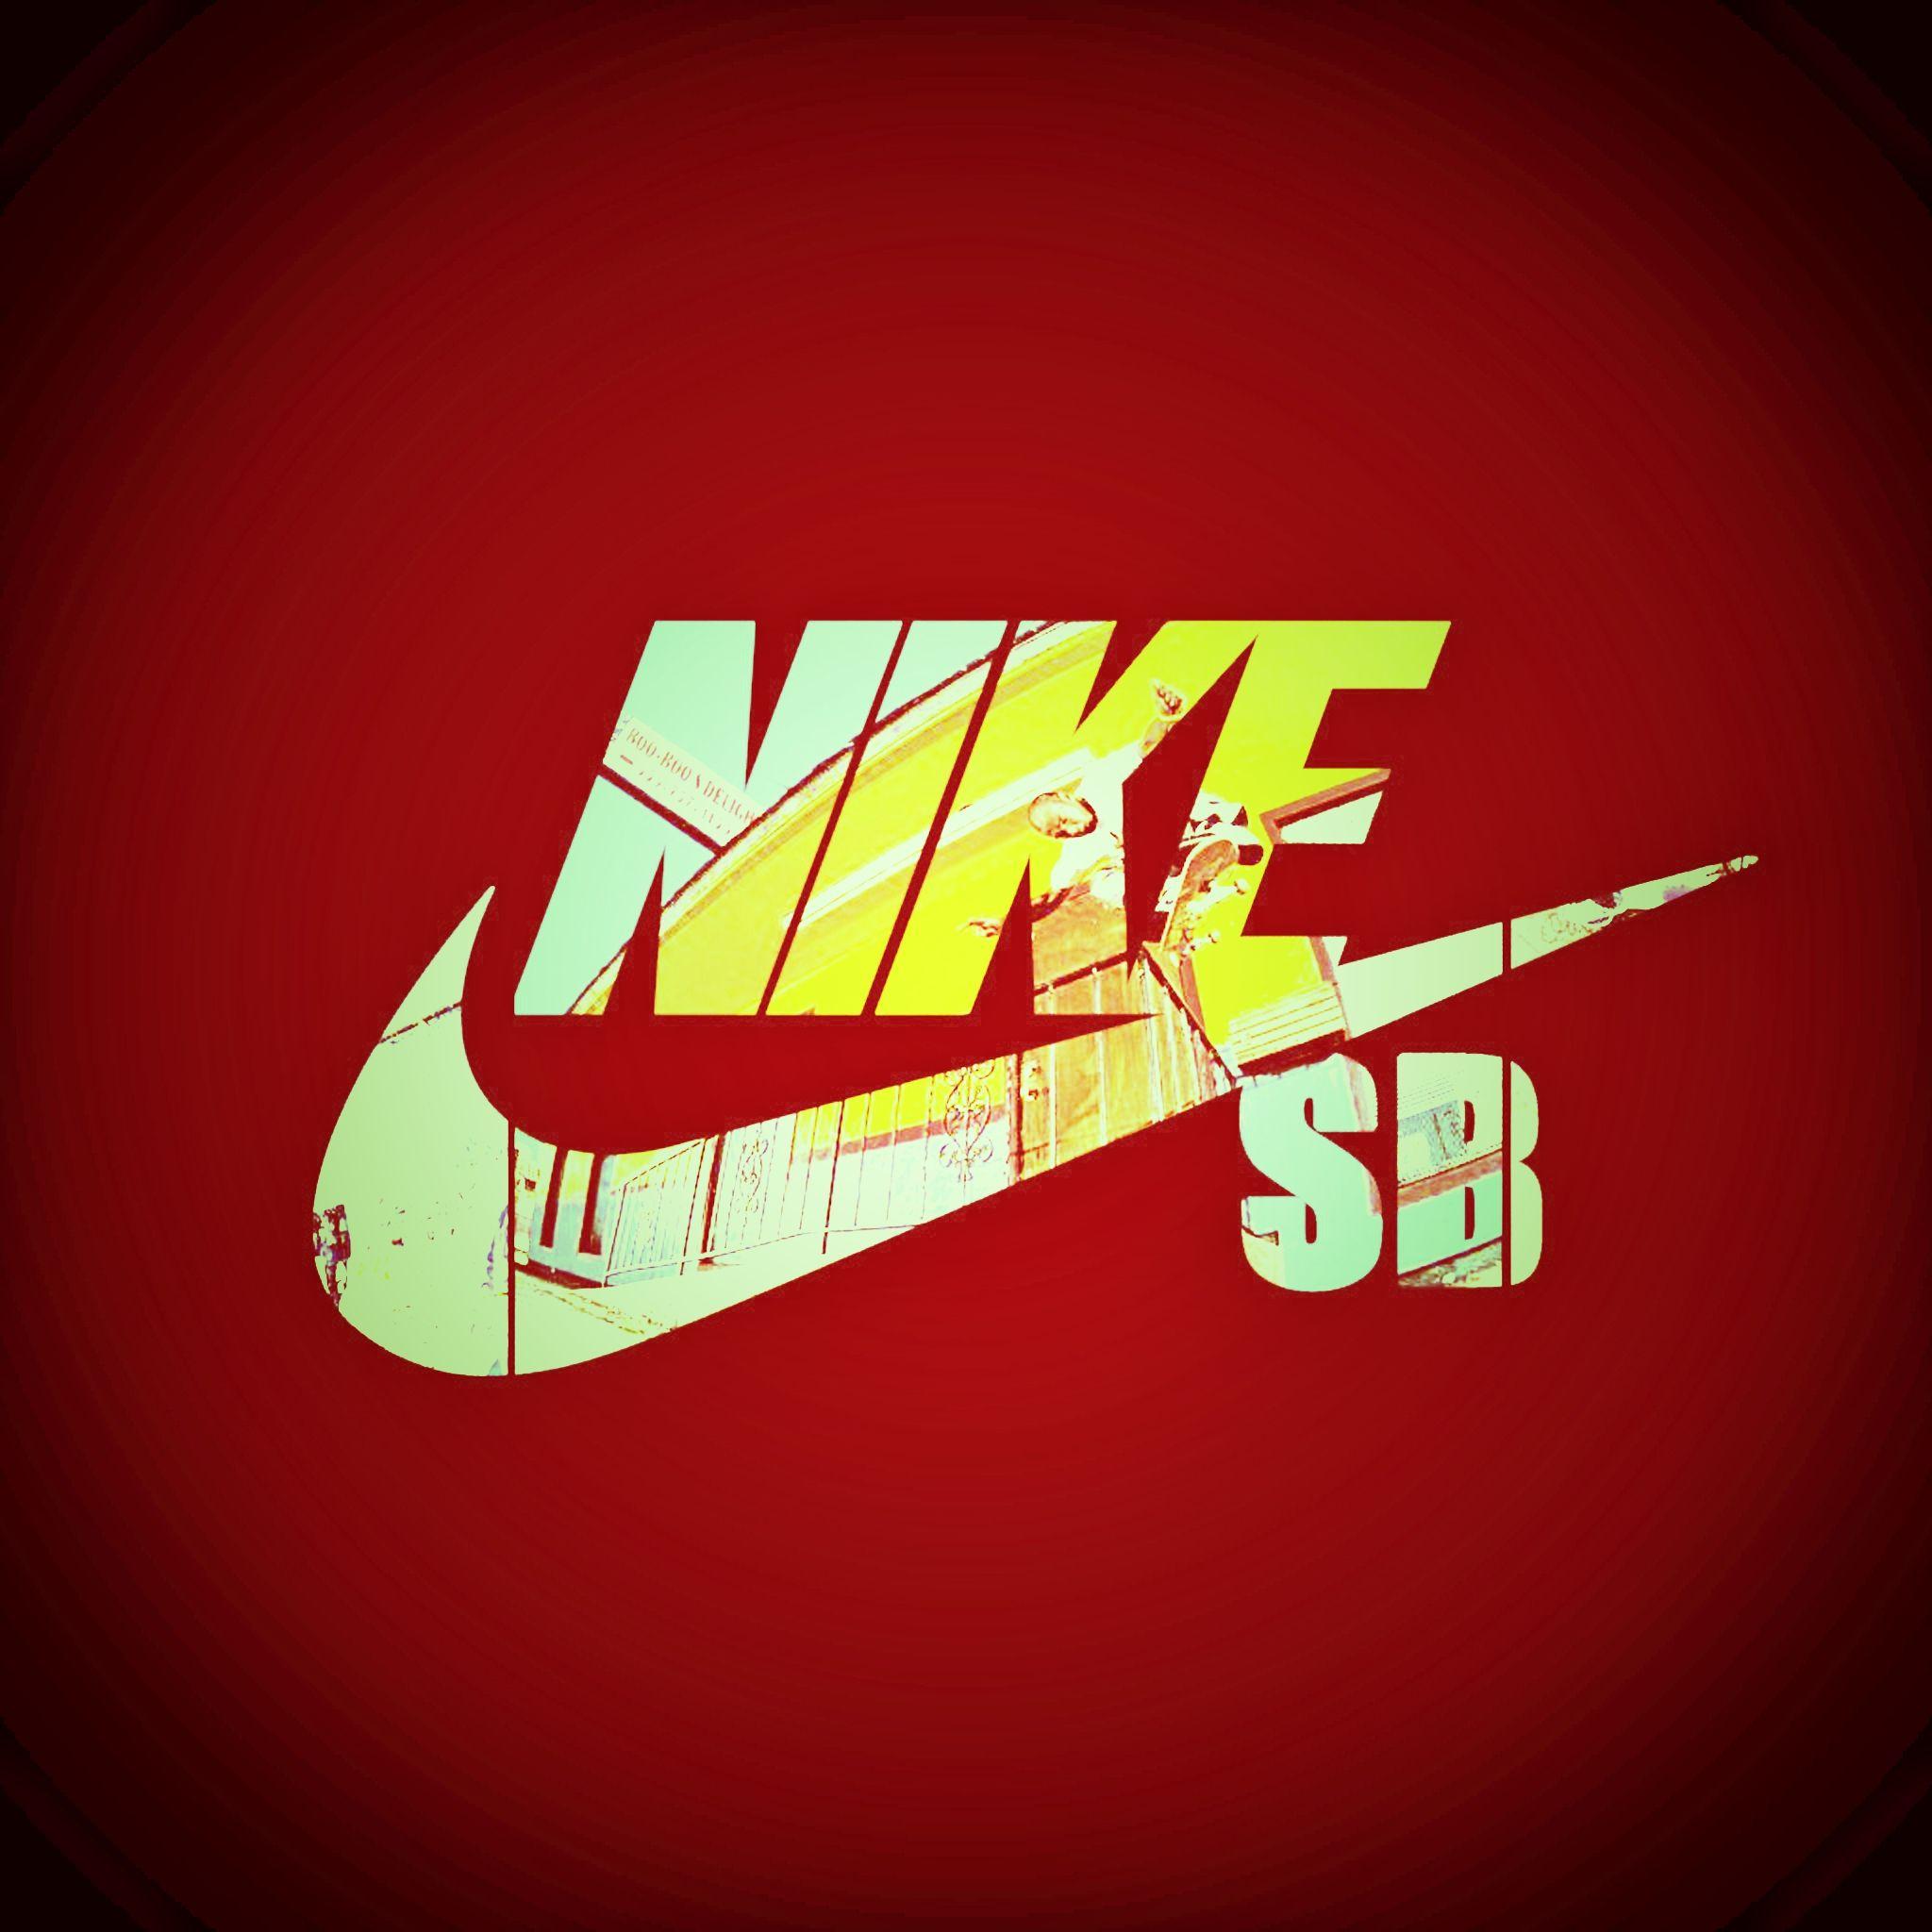 Wallpaper: Amazing Nike Sb Wallpaper. Nike Sb Wallpaper